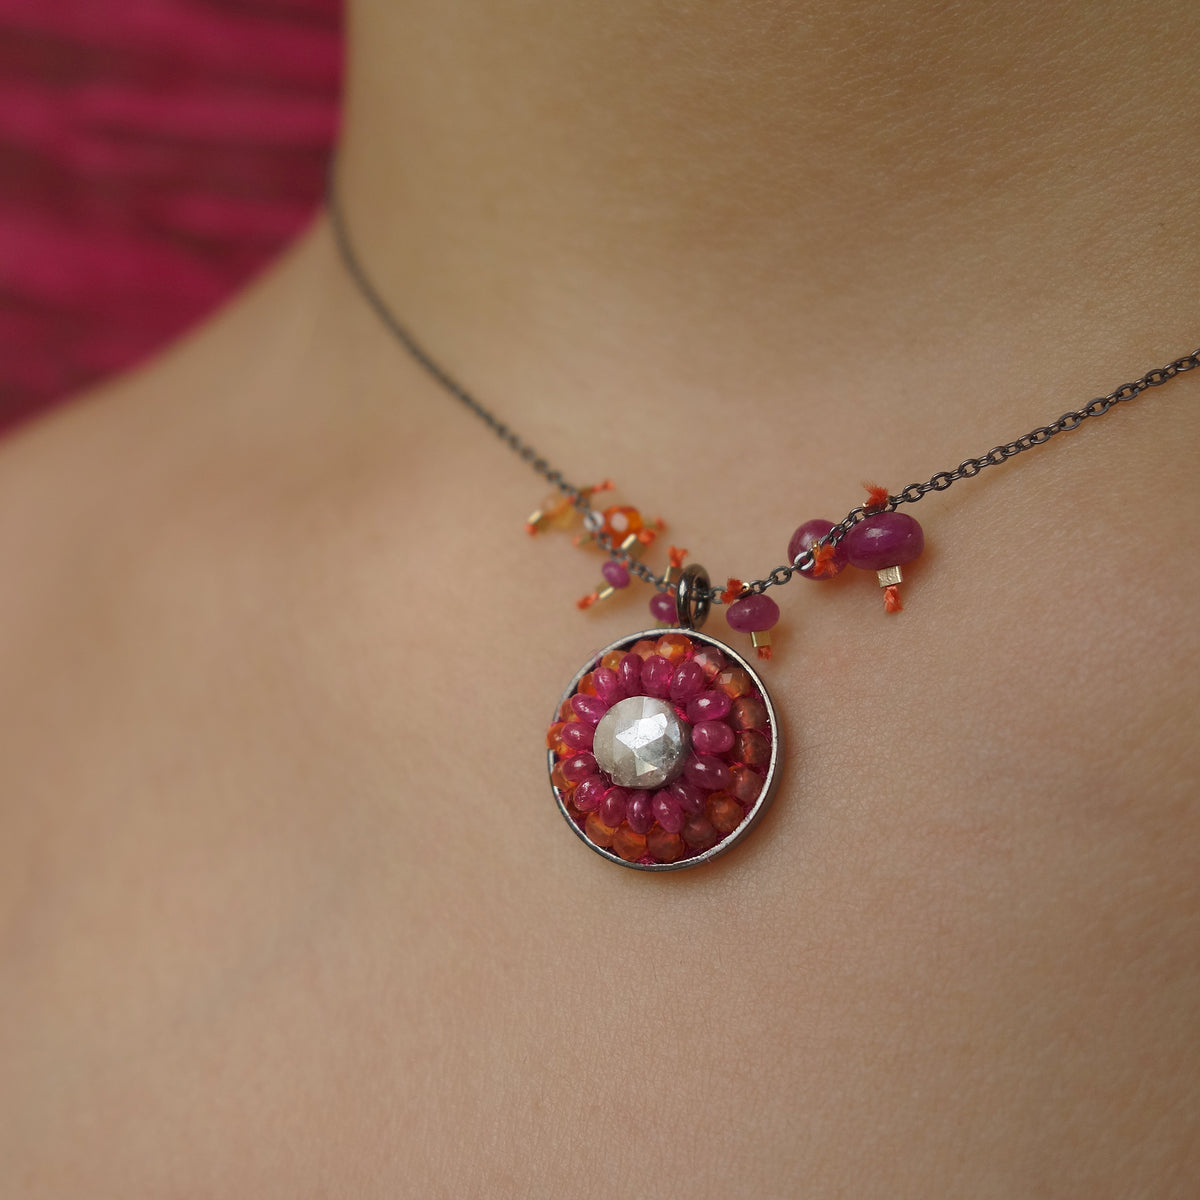 Sunrise, Sunset silverite, ruby, and carnelian necklace